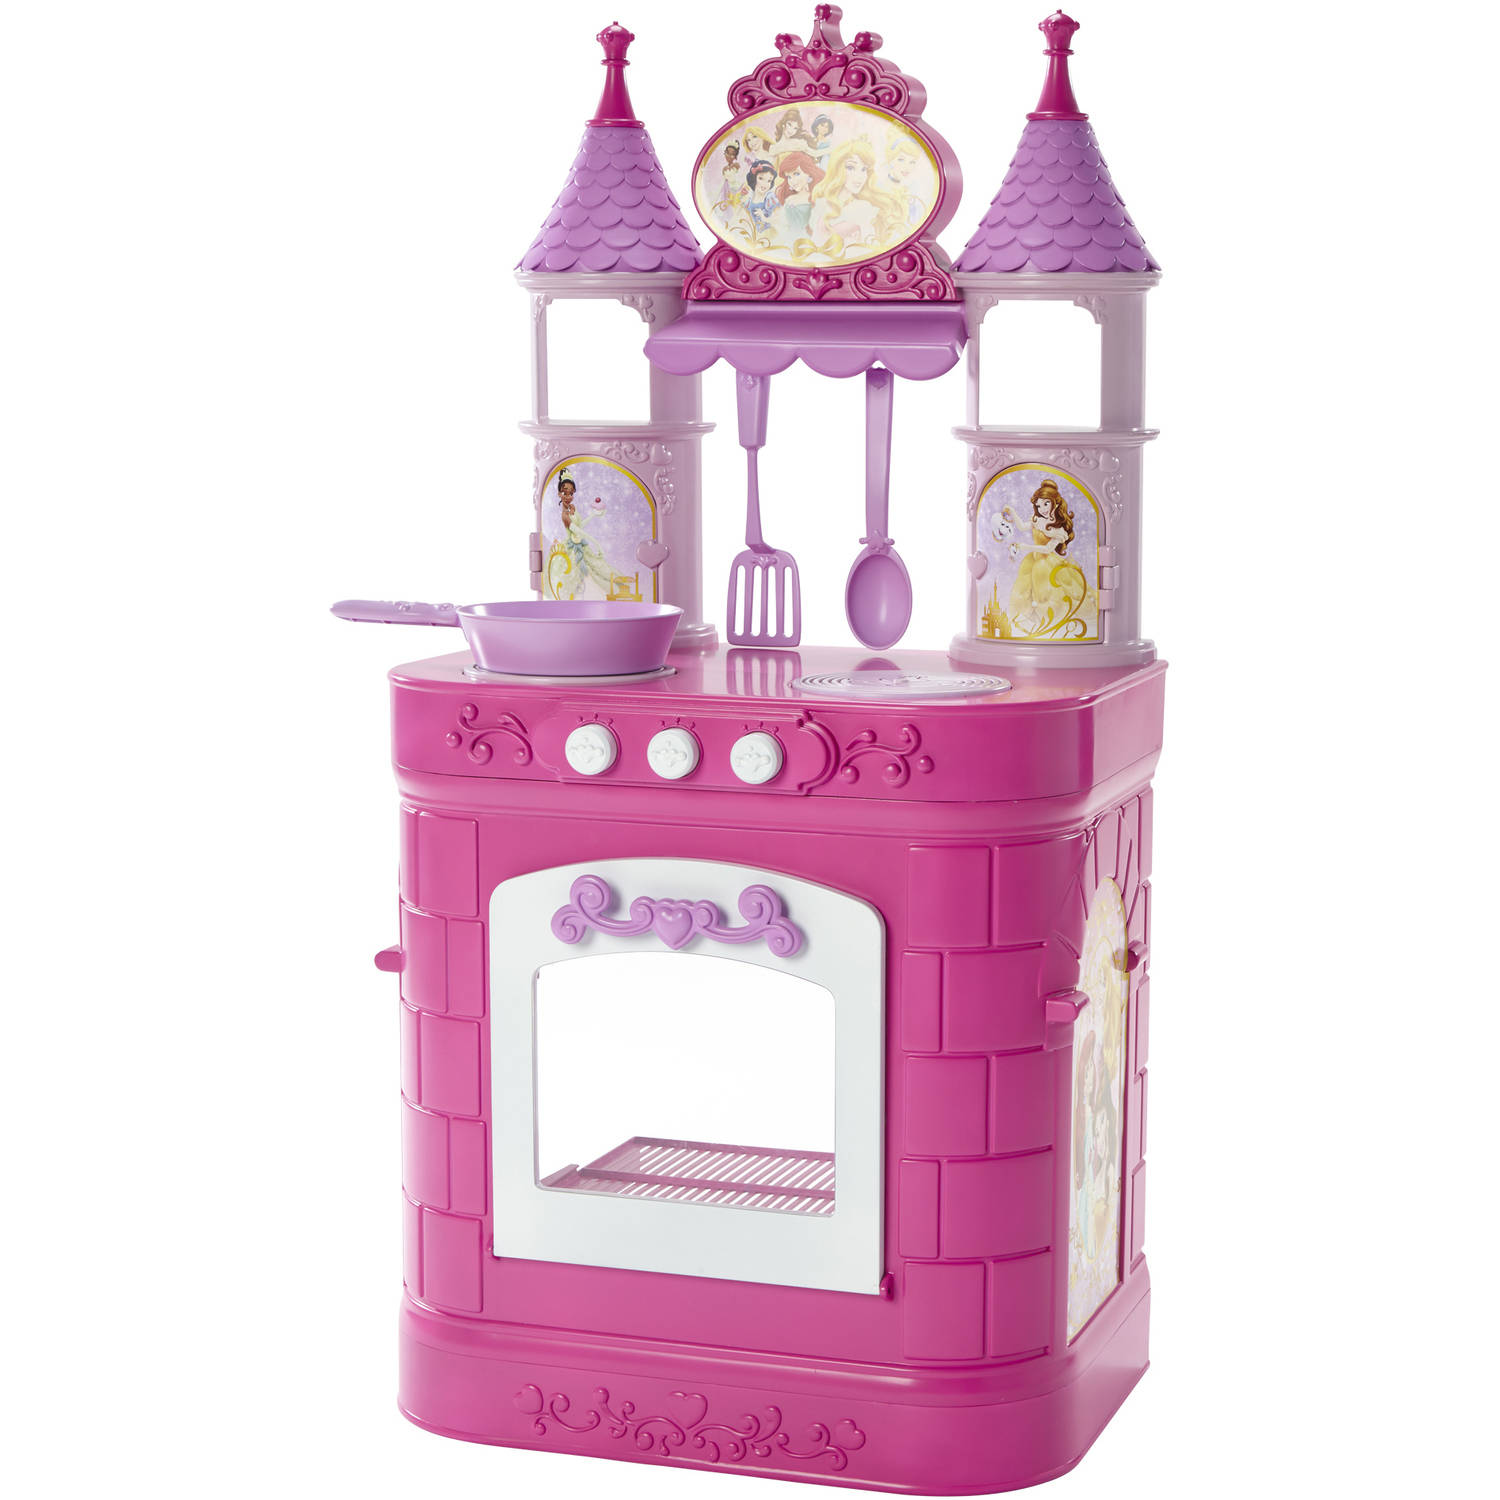 Disney Princess Magical Play Kitchen - image 1 of 5